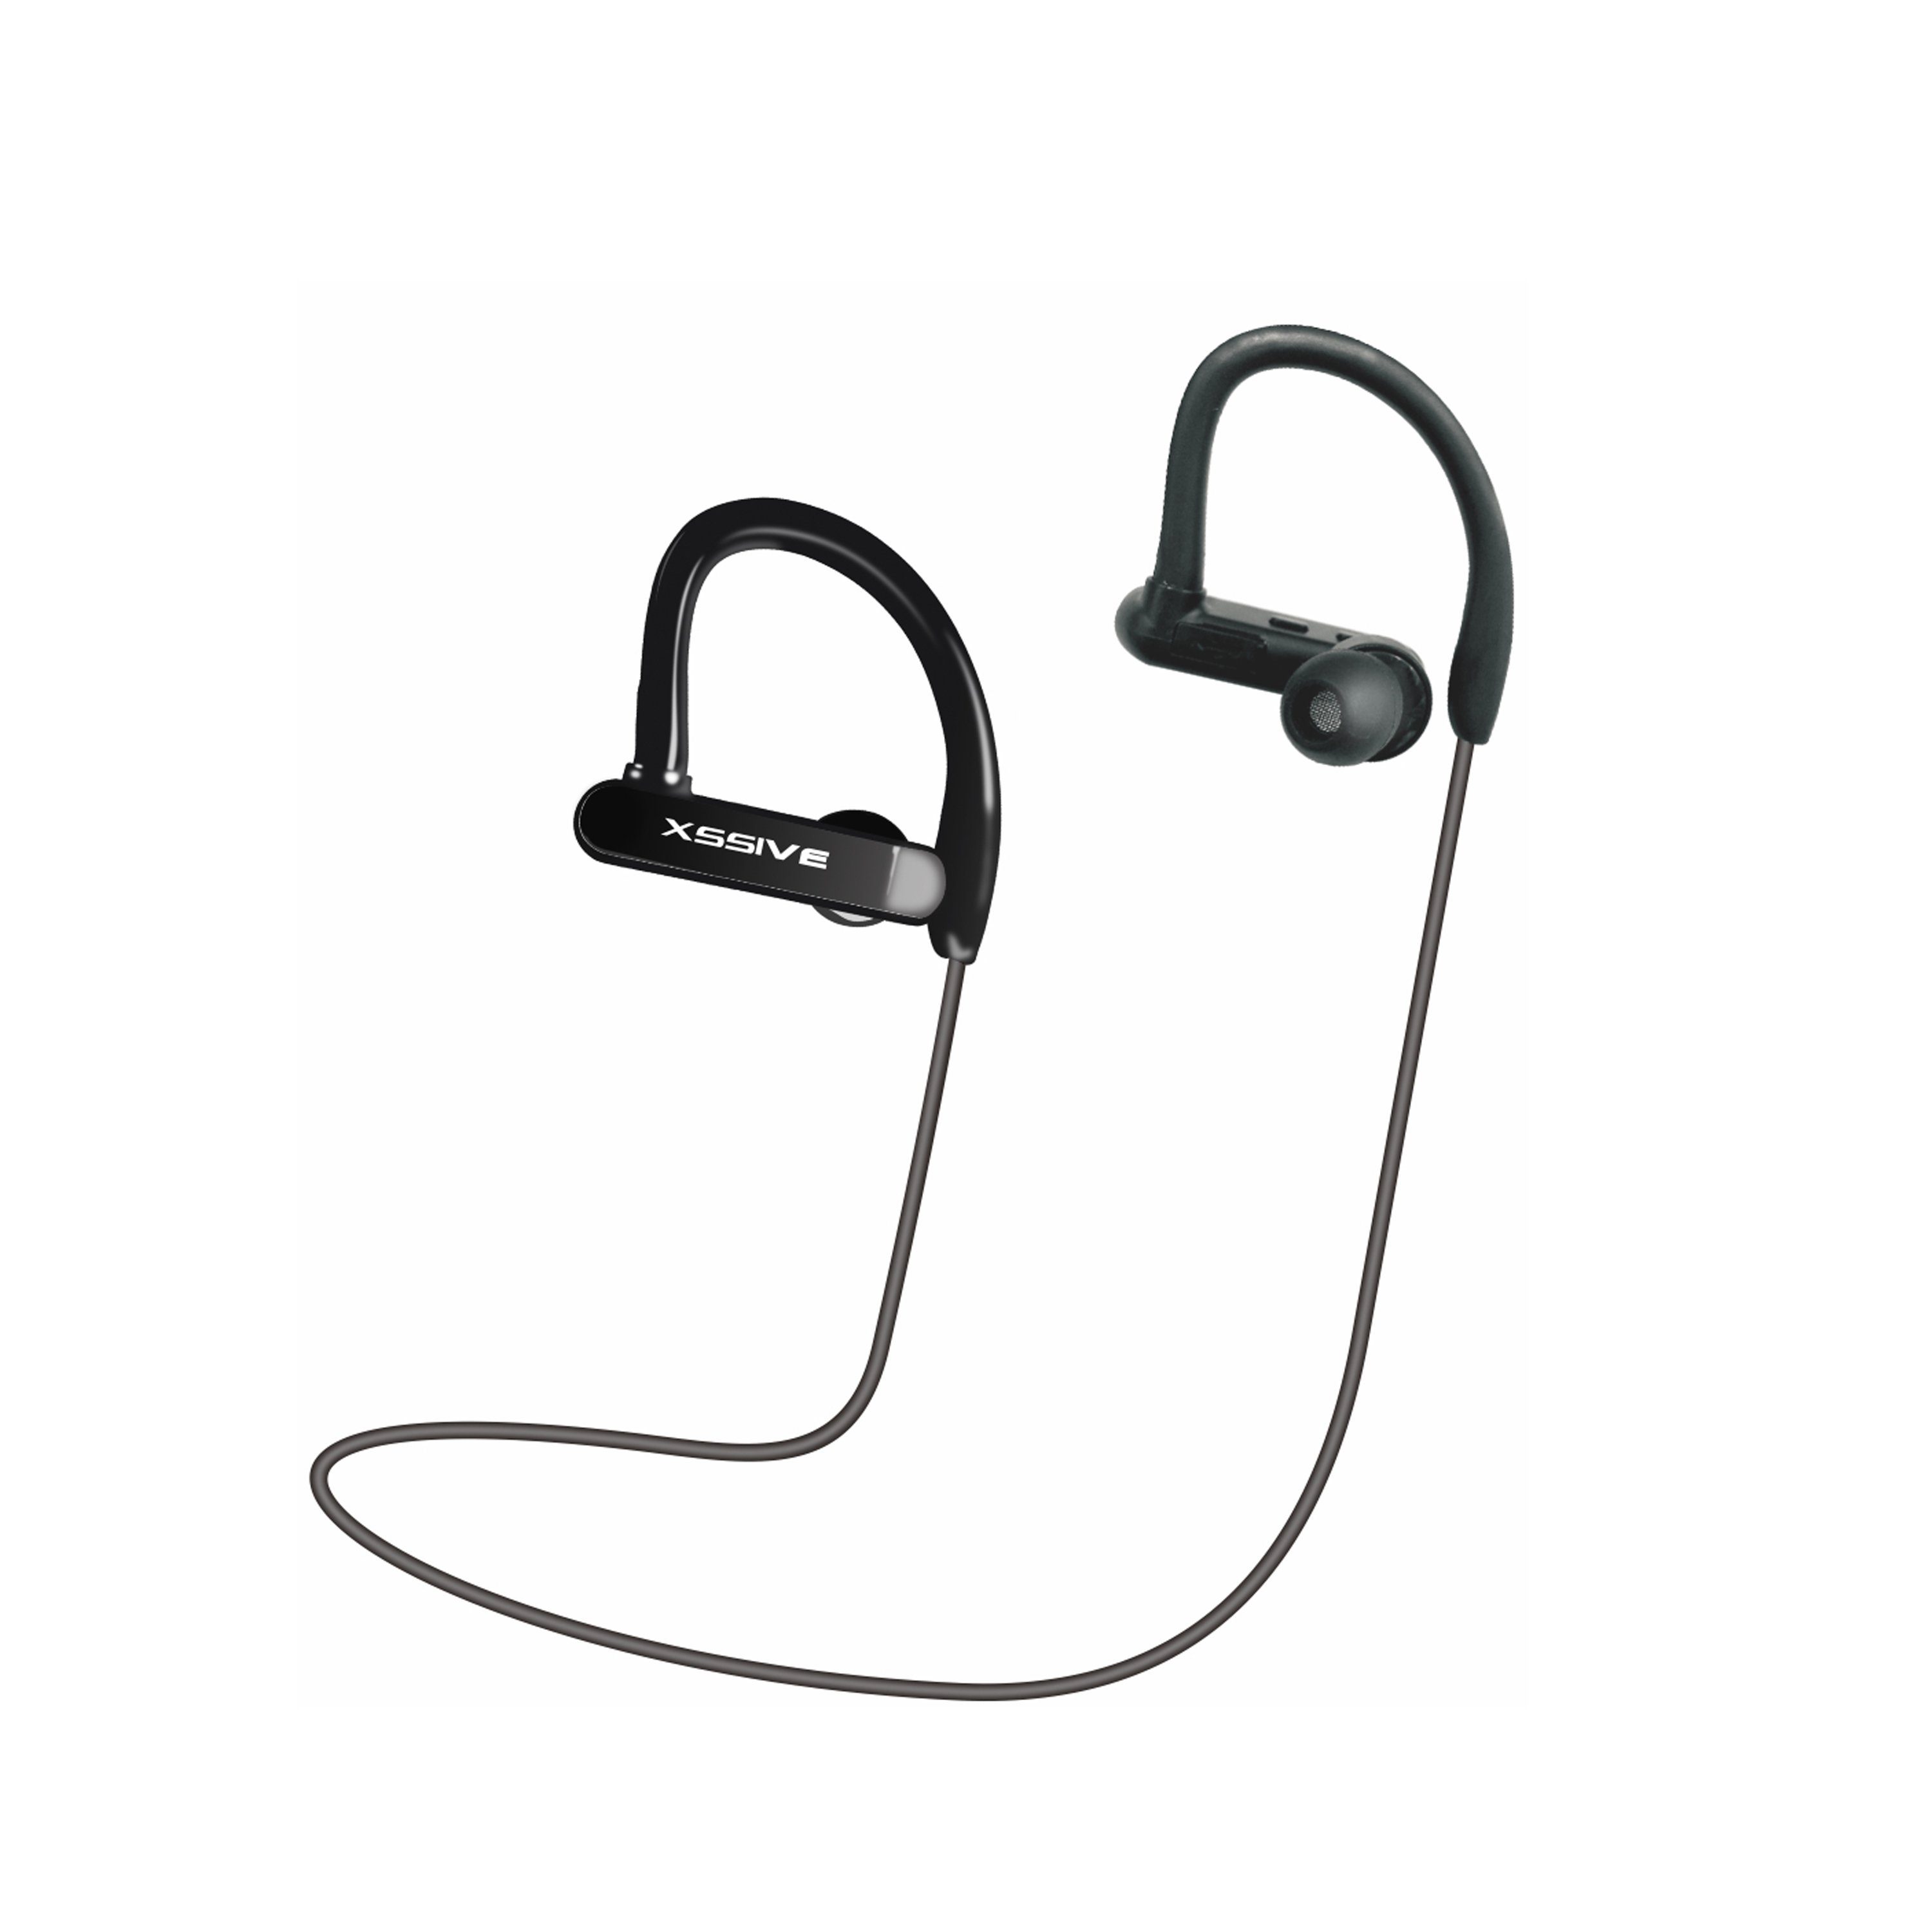 COFI 1453 Kabellos Bluetooth Sport Headset Kopfhörer Fitness schwarz wireless In-Ear-Kopfhörer